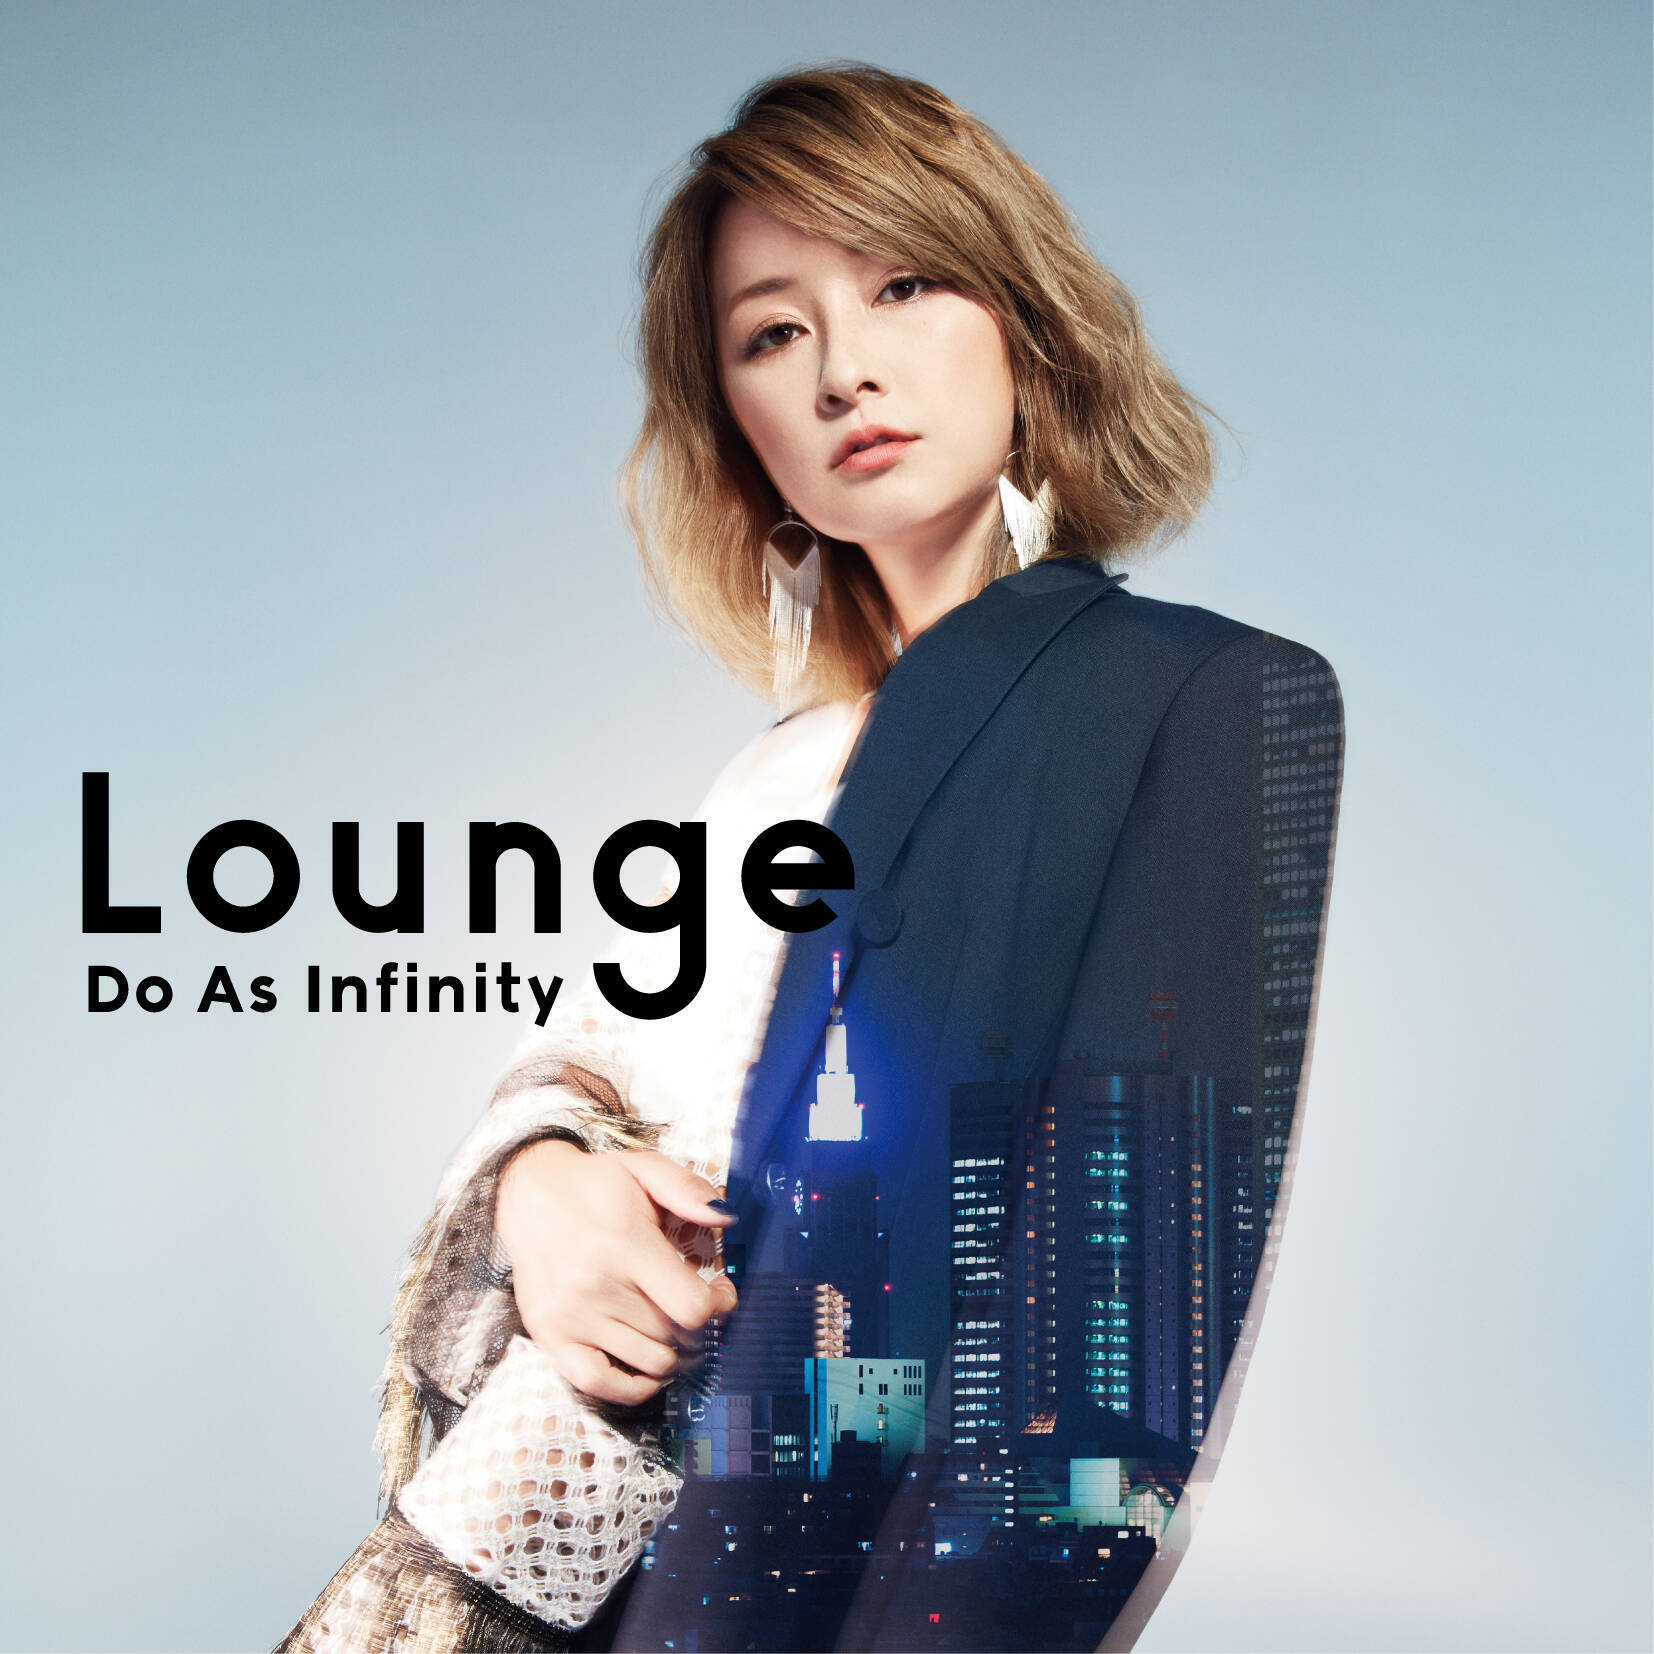 Do As Infinity デビュー周年リアレンジアルバムのジャケ写 全収録楽曲を解禁 19年5月15日 エキサイトニュース